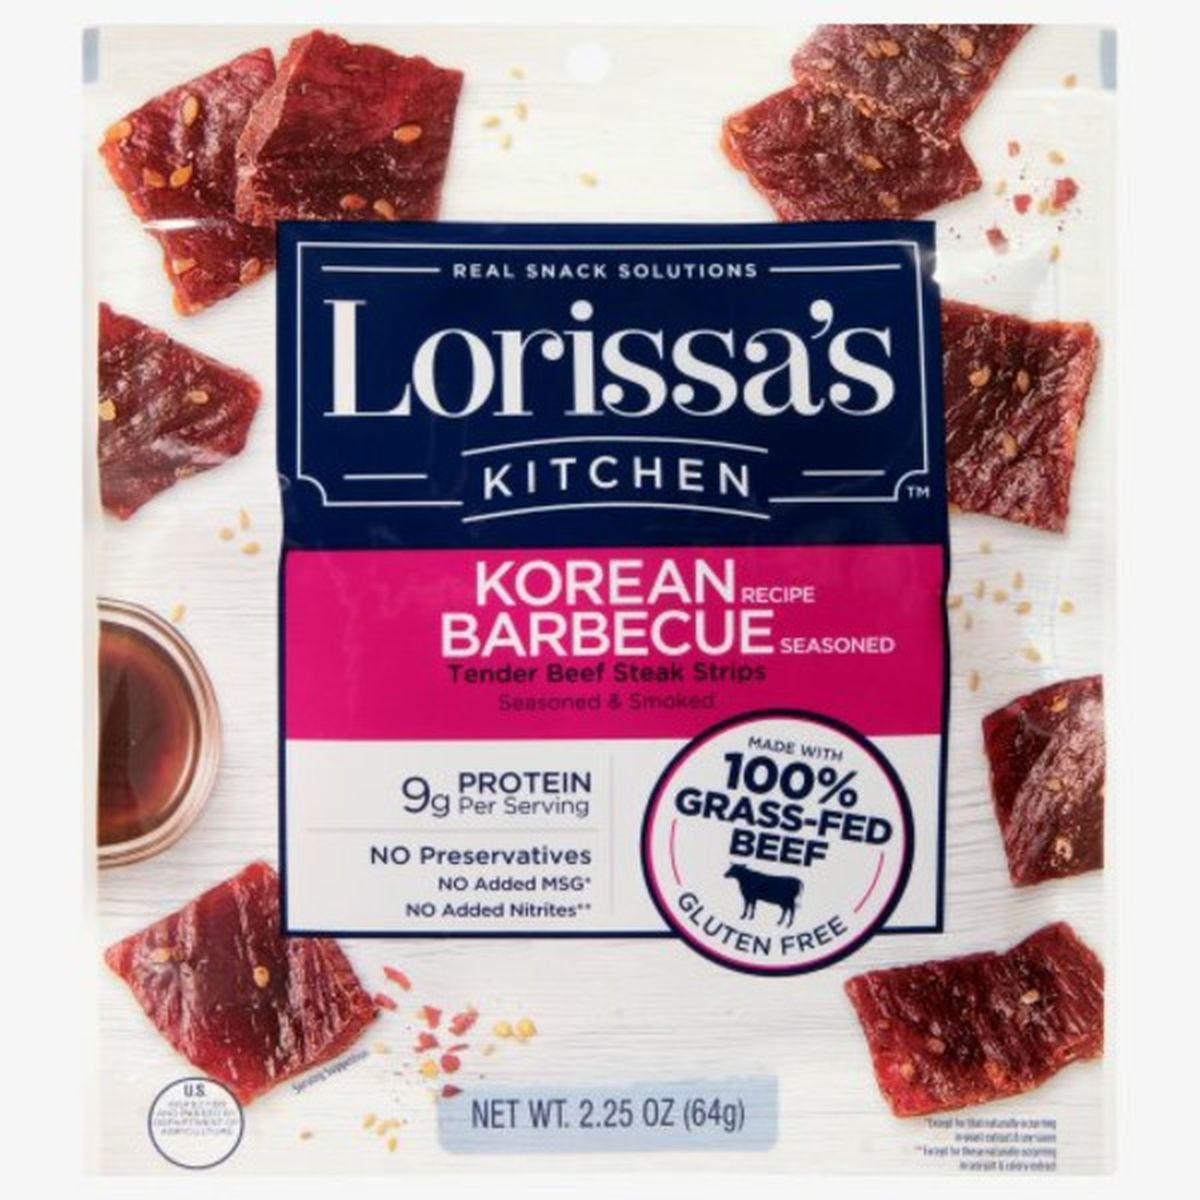 Calories in Lorissas Kitchen Streak Strips, Tender Beef, Barbecue Seasoned, Korean Recipe